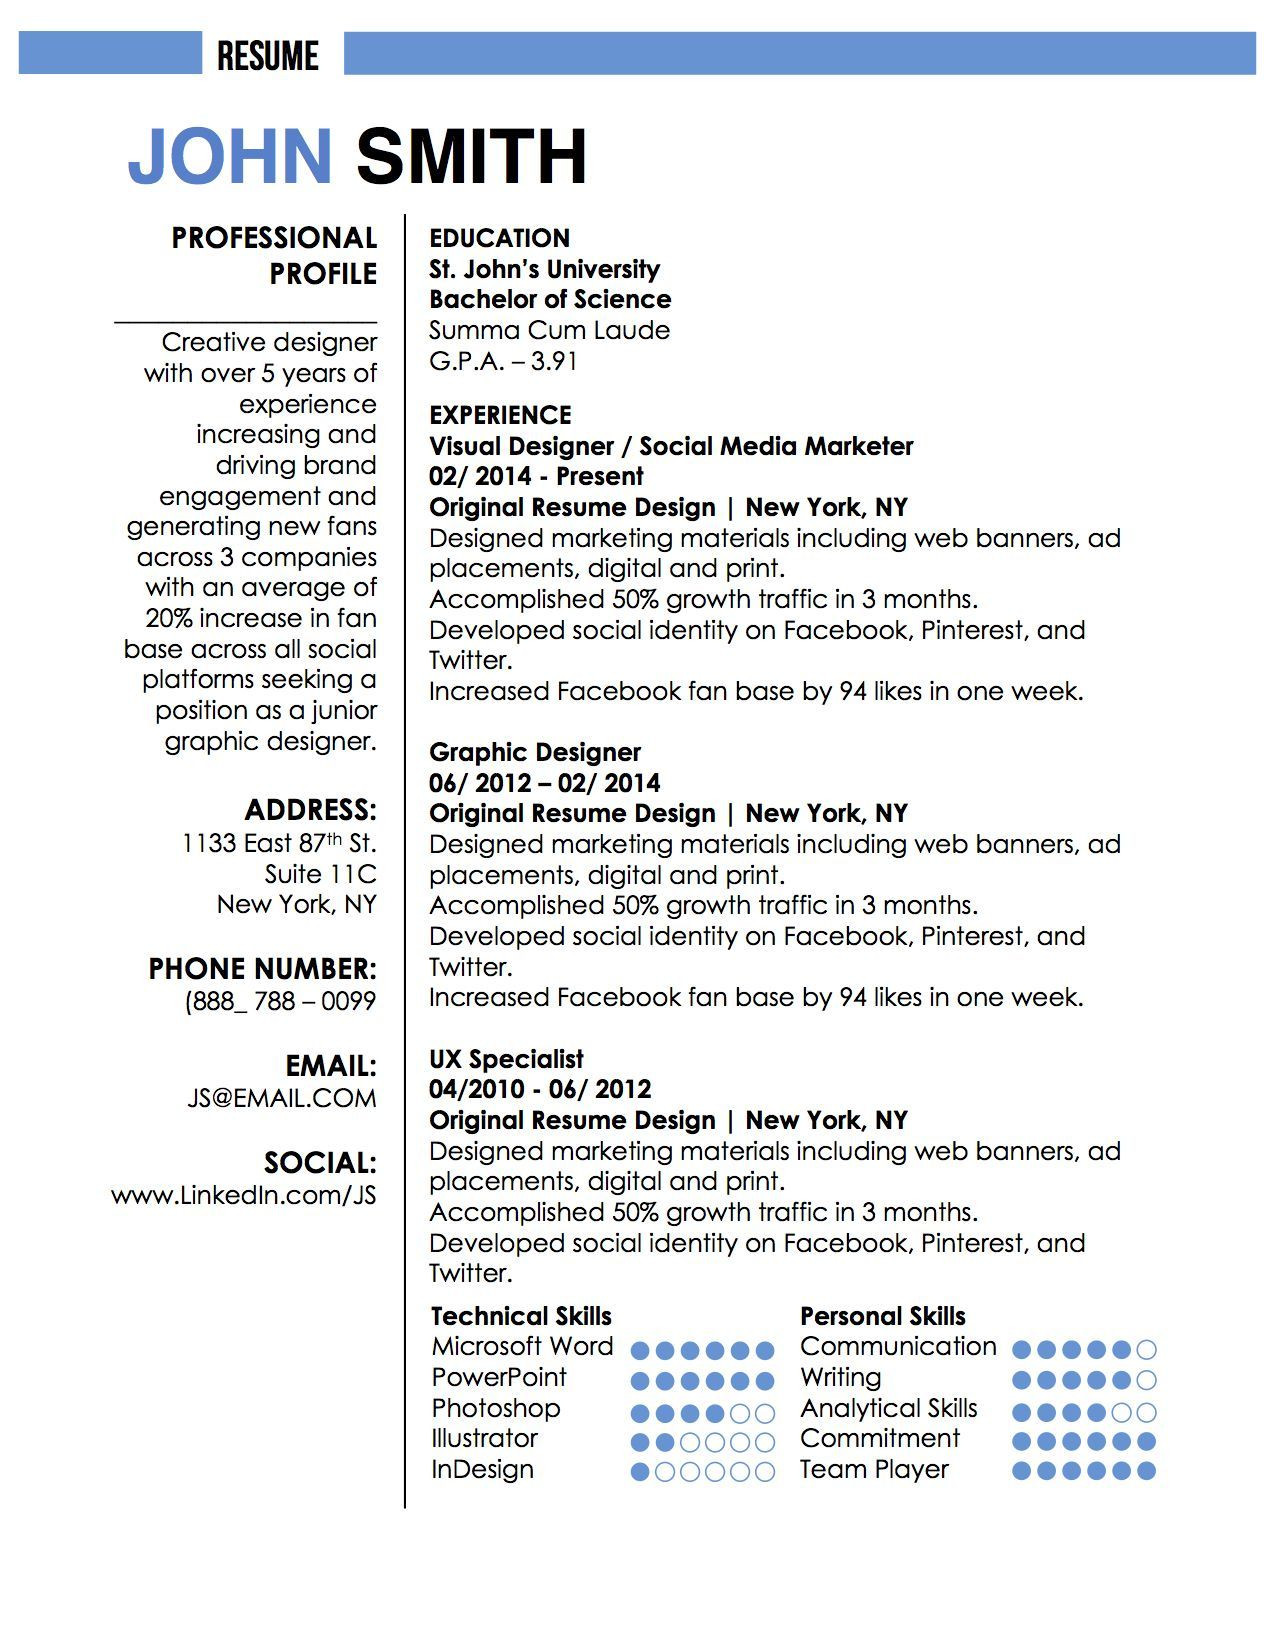 John Smith Resume Template Free Download John Smith Resume Template Job Resume Template, Resume, Resume …